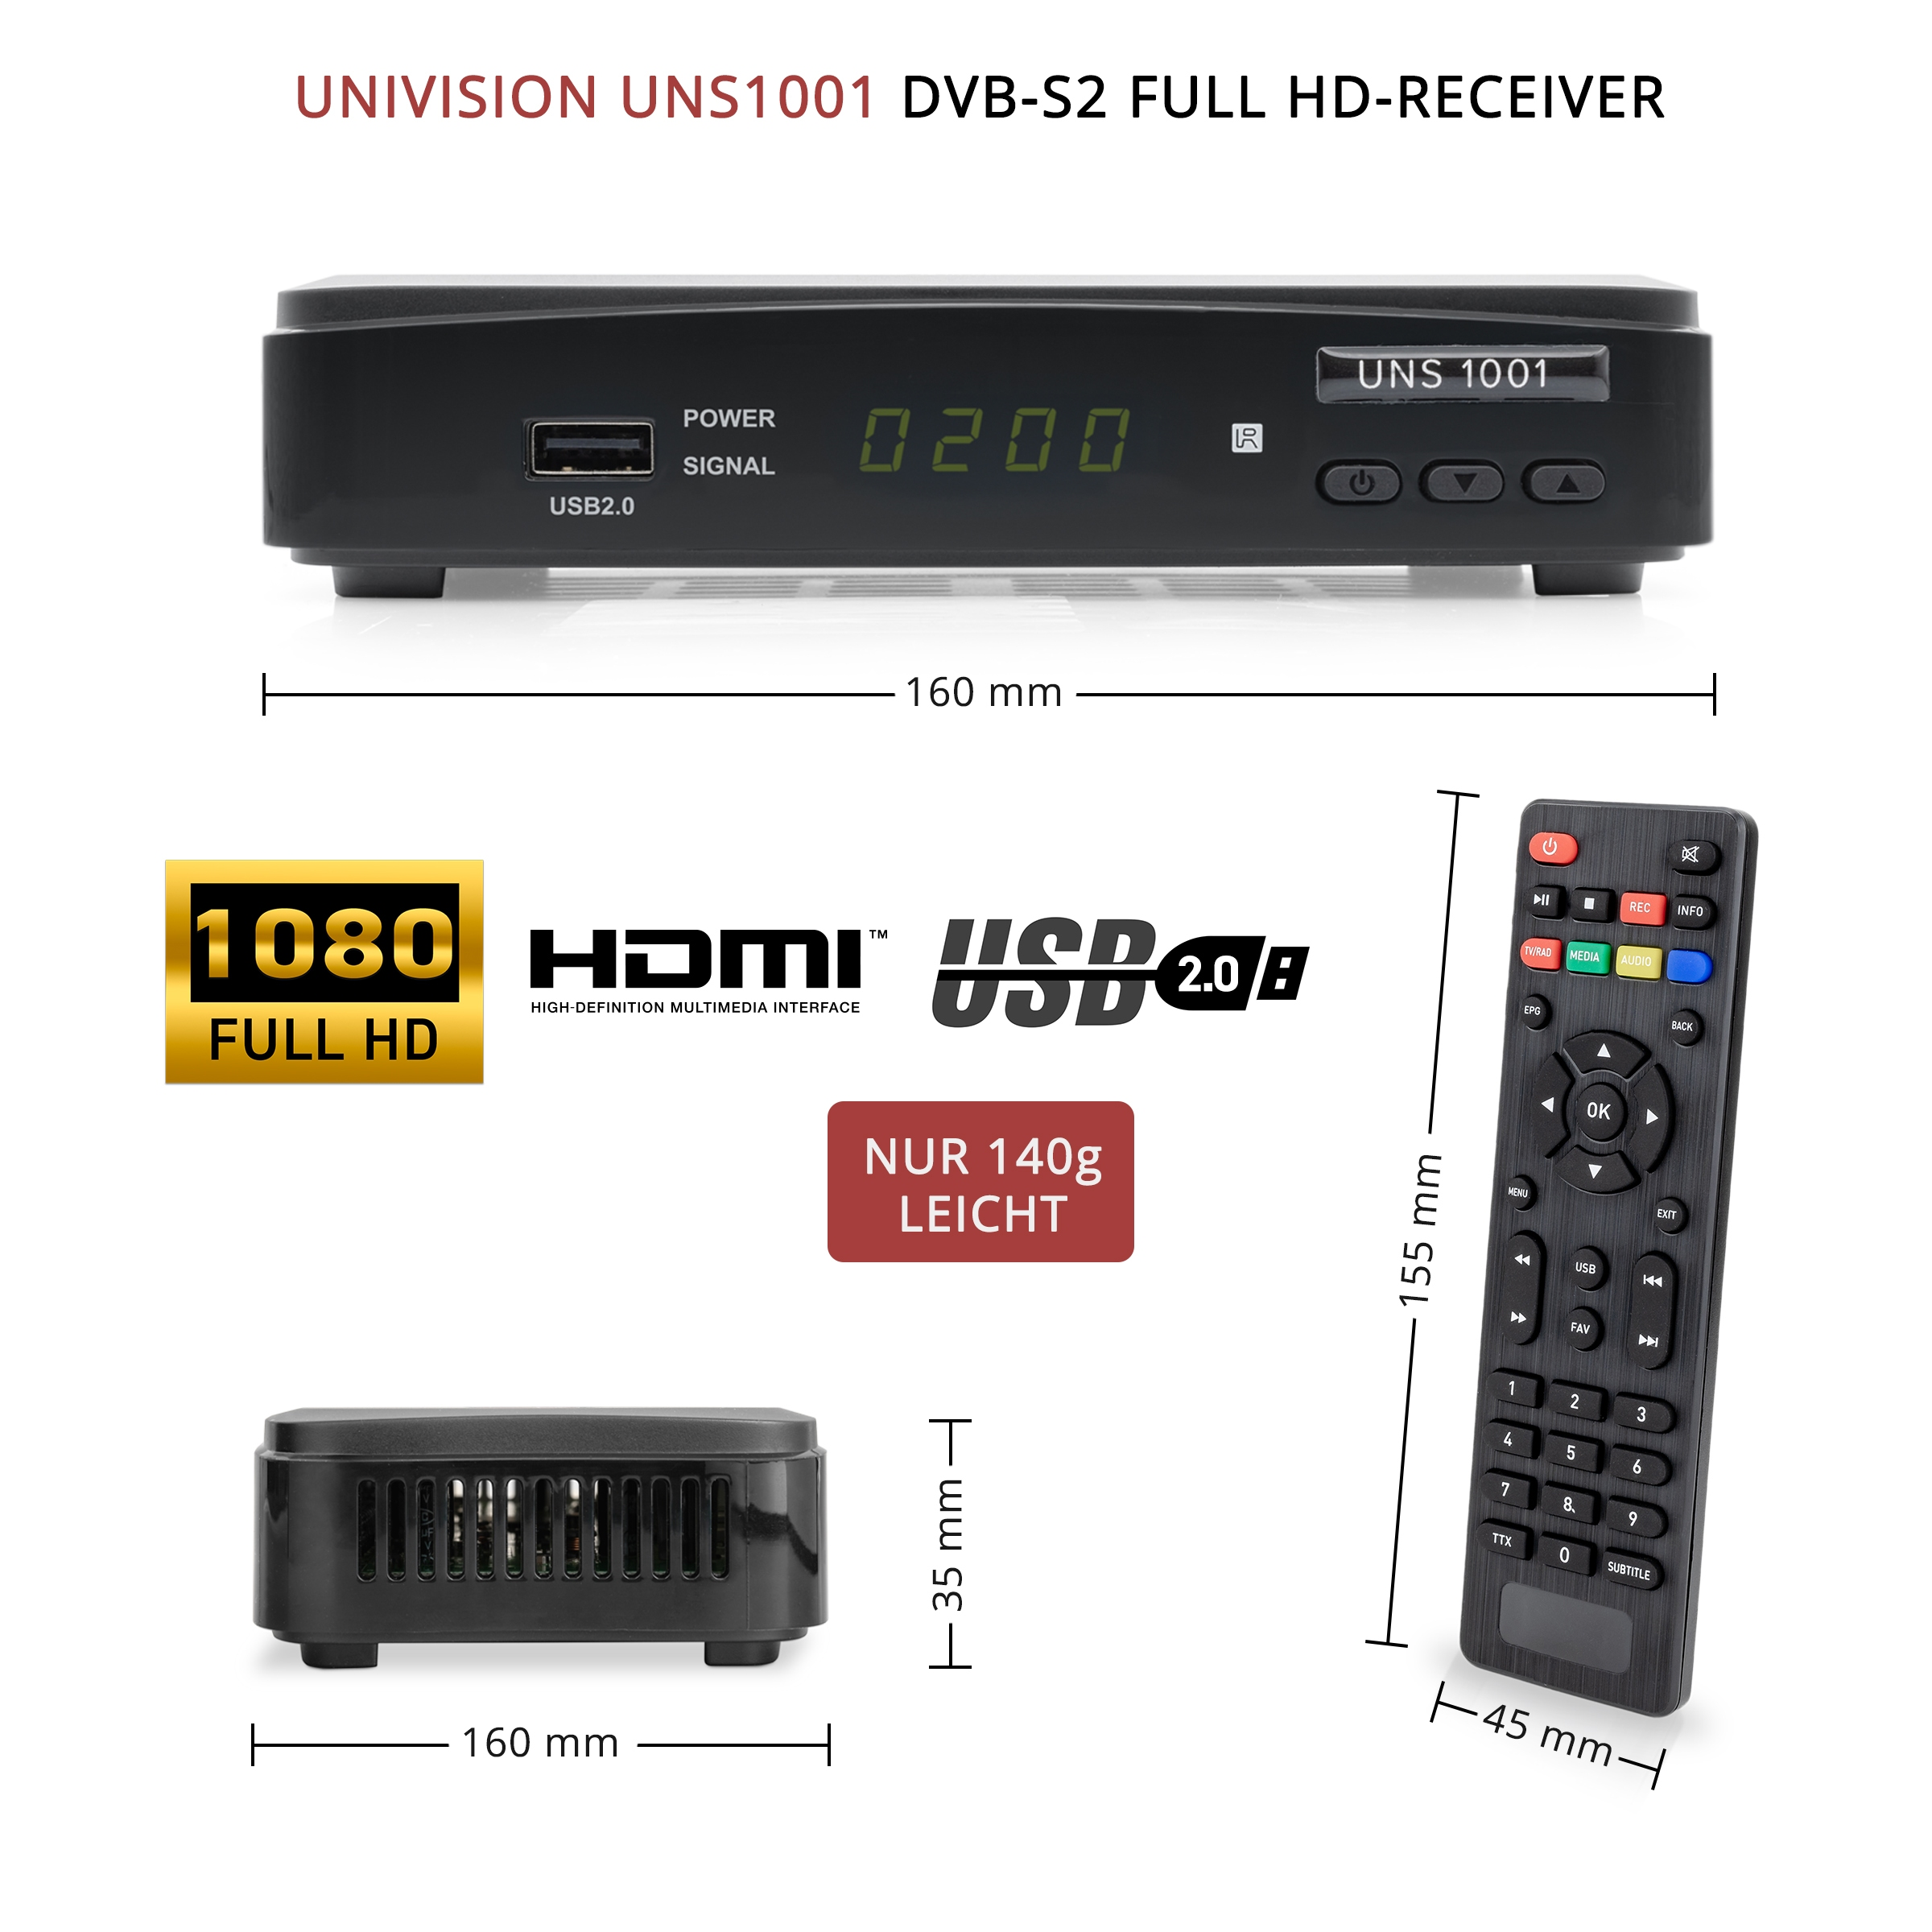 UNIVISION Sat Receiver DVB-S2, DVB-S, (HDTV, schwarz) DVB-S2 Receiver